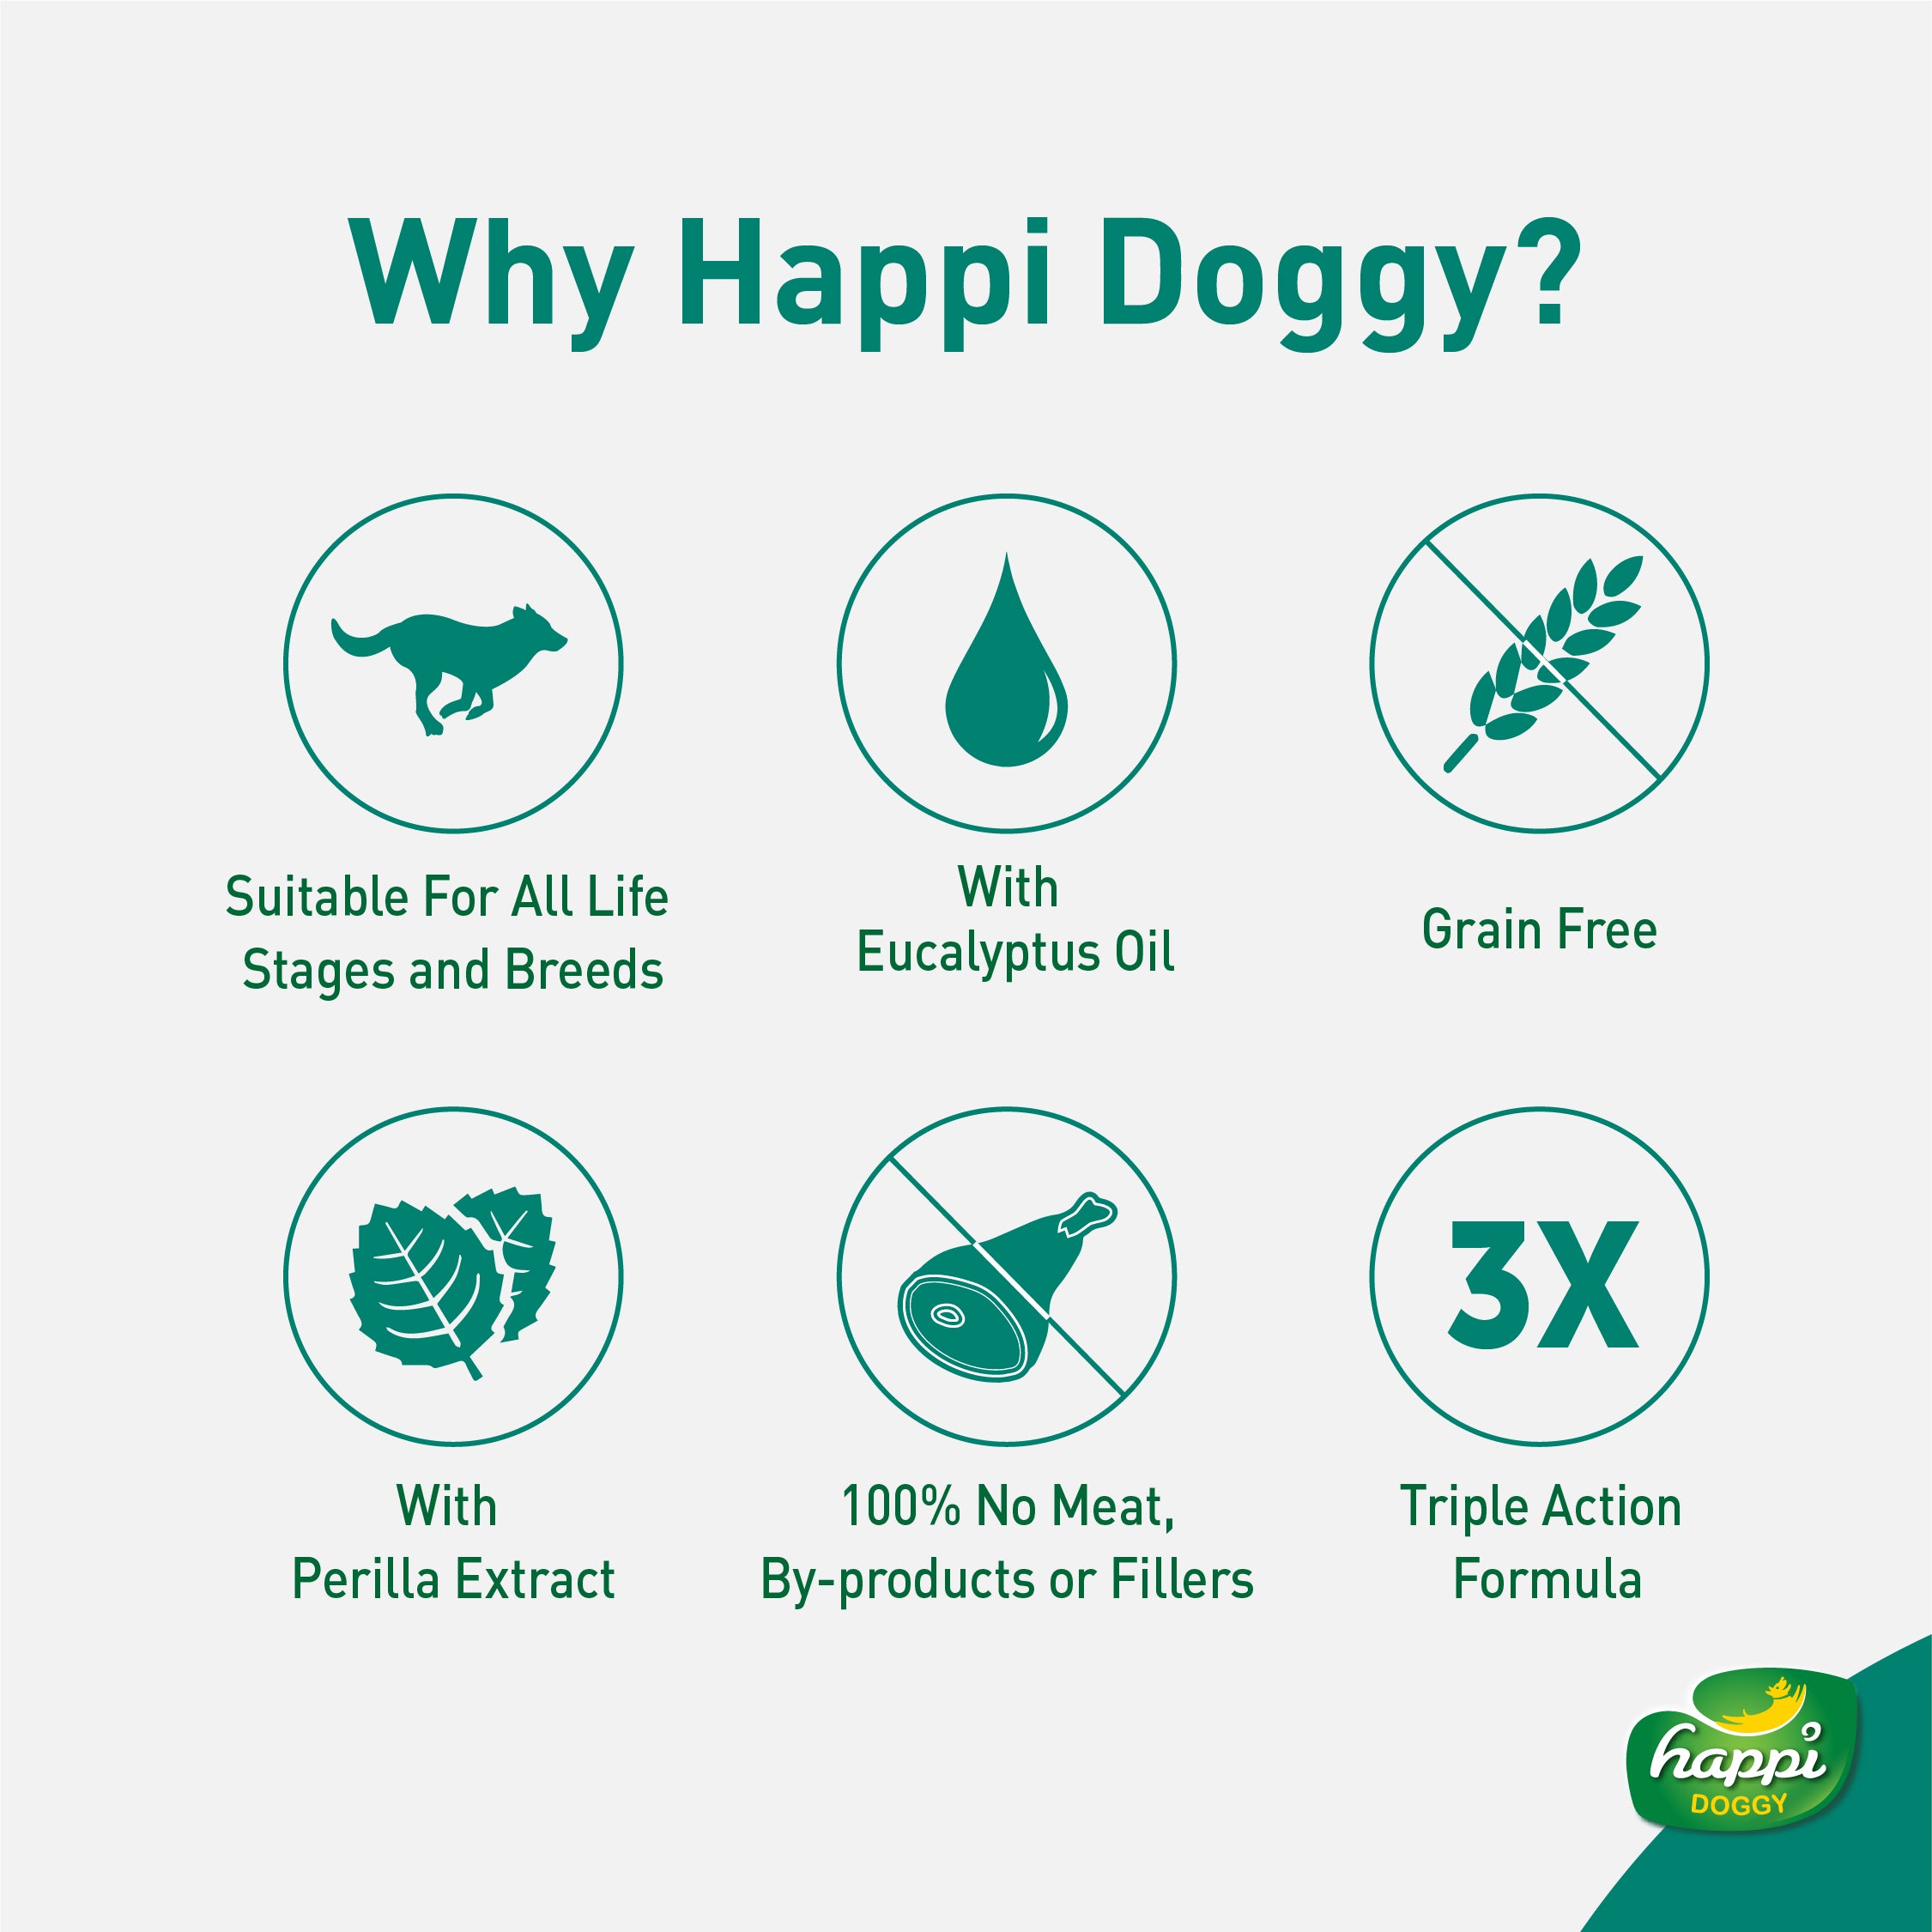 Happi Doggy Apple Dental Chew Zest 4" Box (50 pcs)